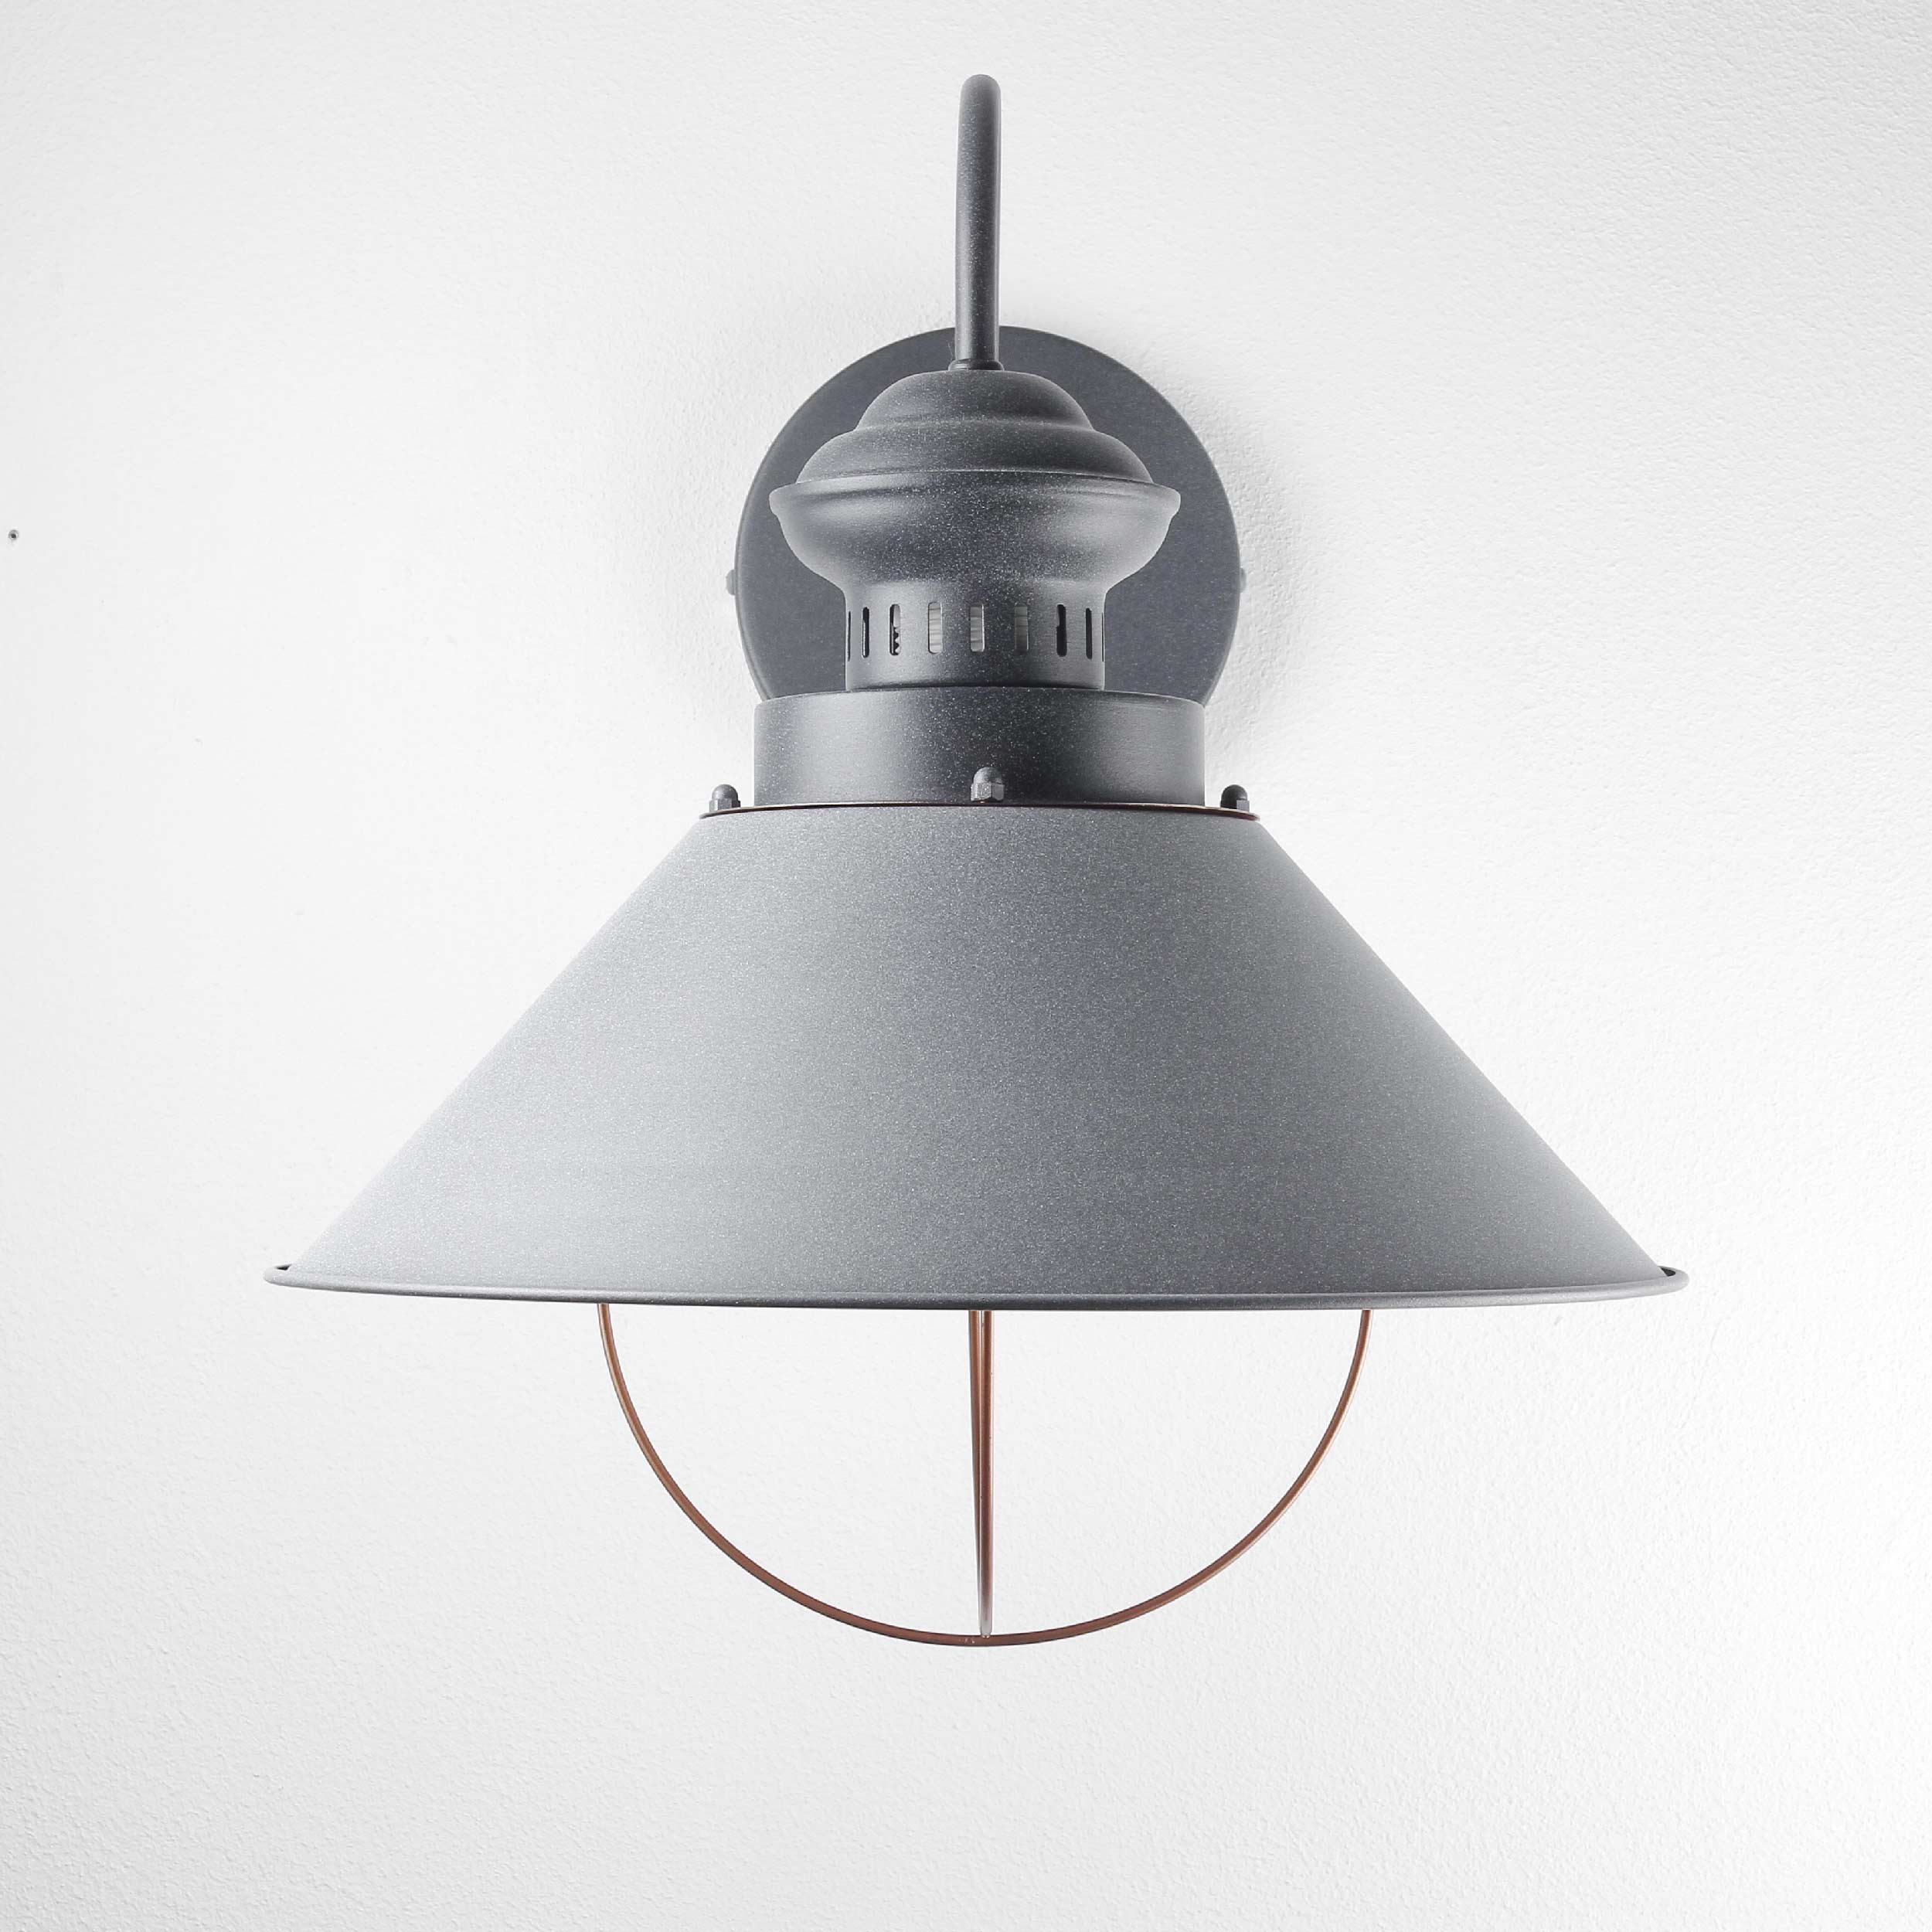 Wandlampe innen Grau Kupfer E27 Industrie Design